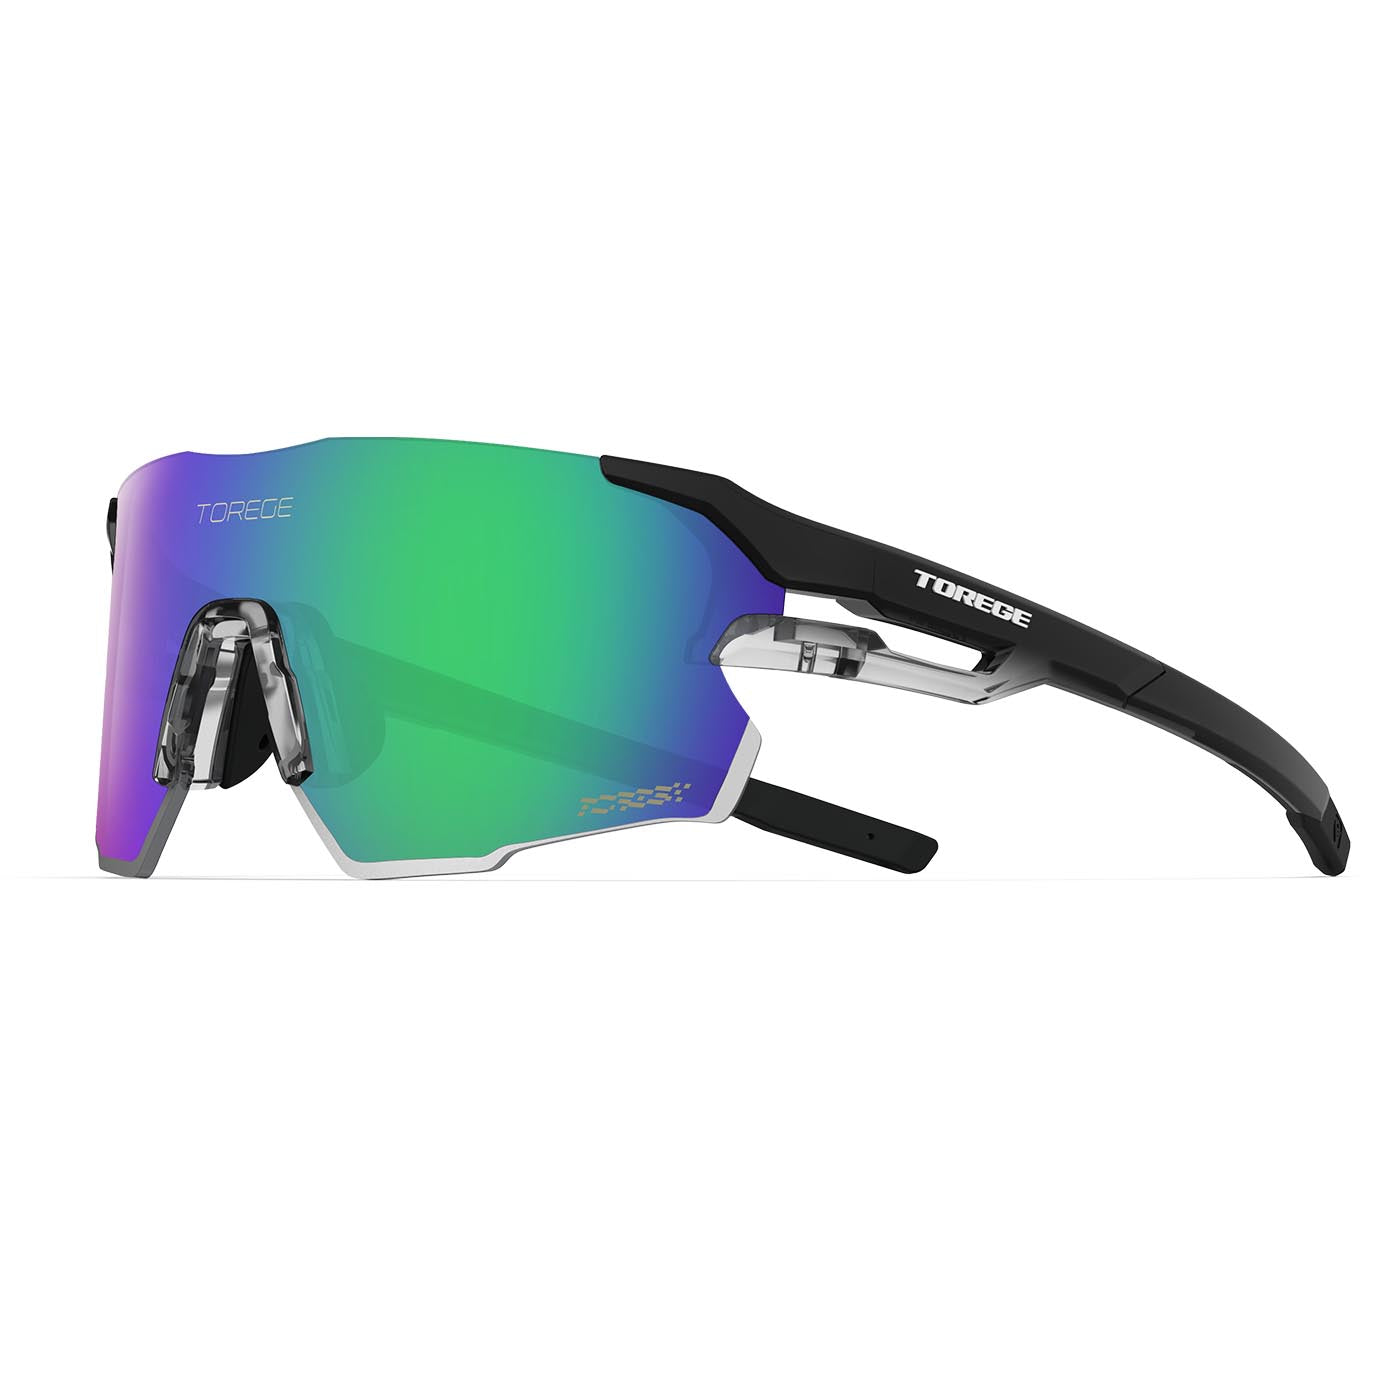 Polarised Sunglasses Cycling Running Fishing Bea Cool 100% UV400